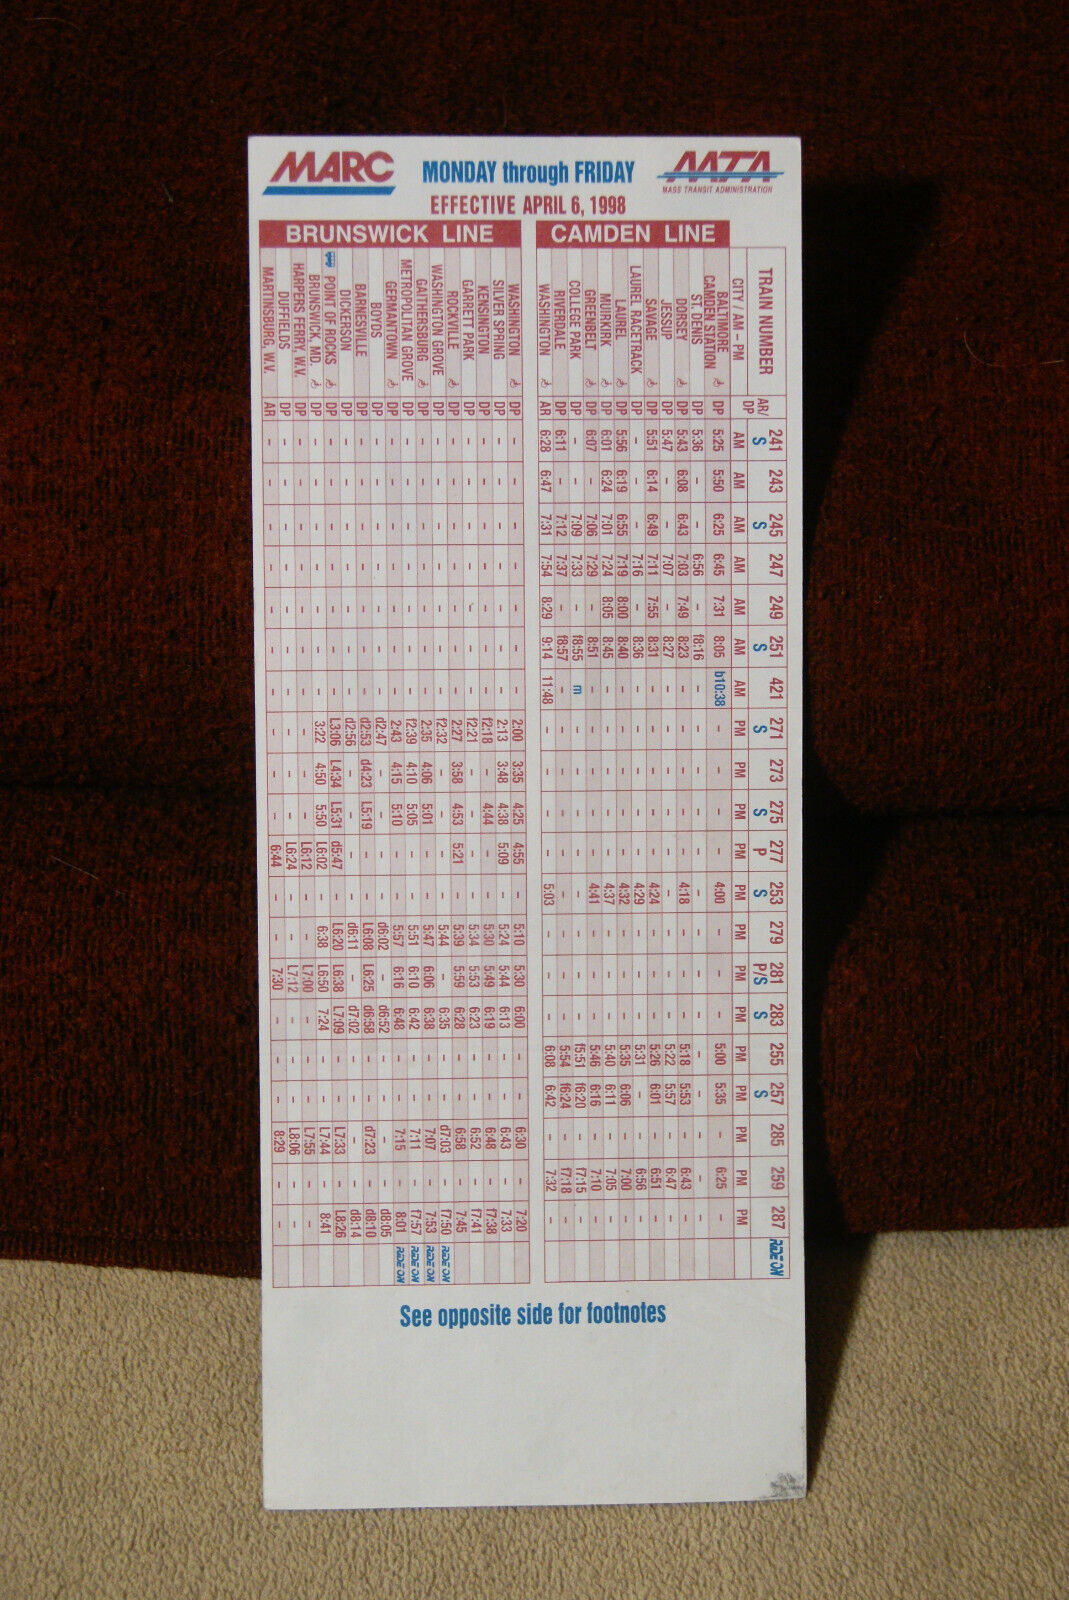 MARC Timetable Card - Brunswick Line - Camden Line - April 6, 1998